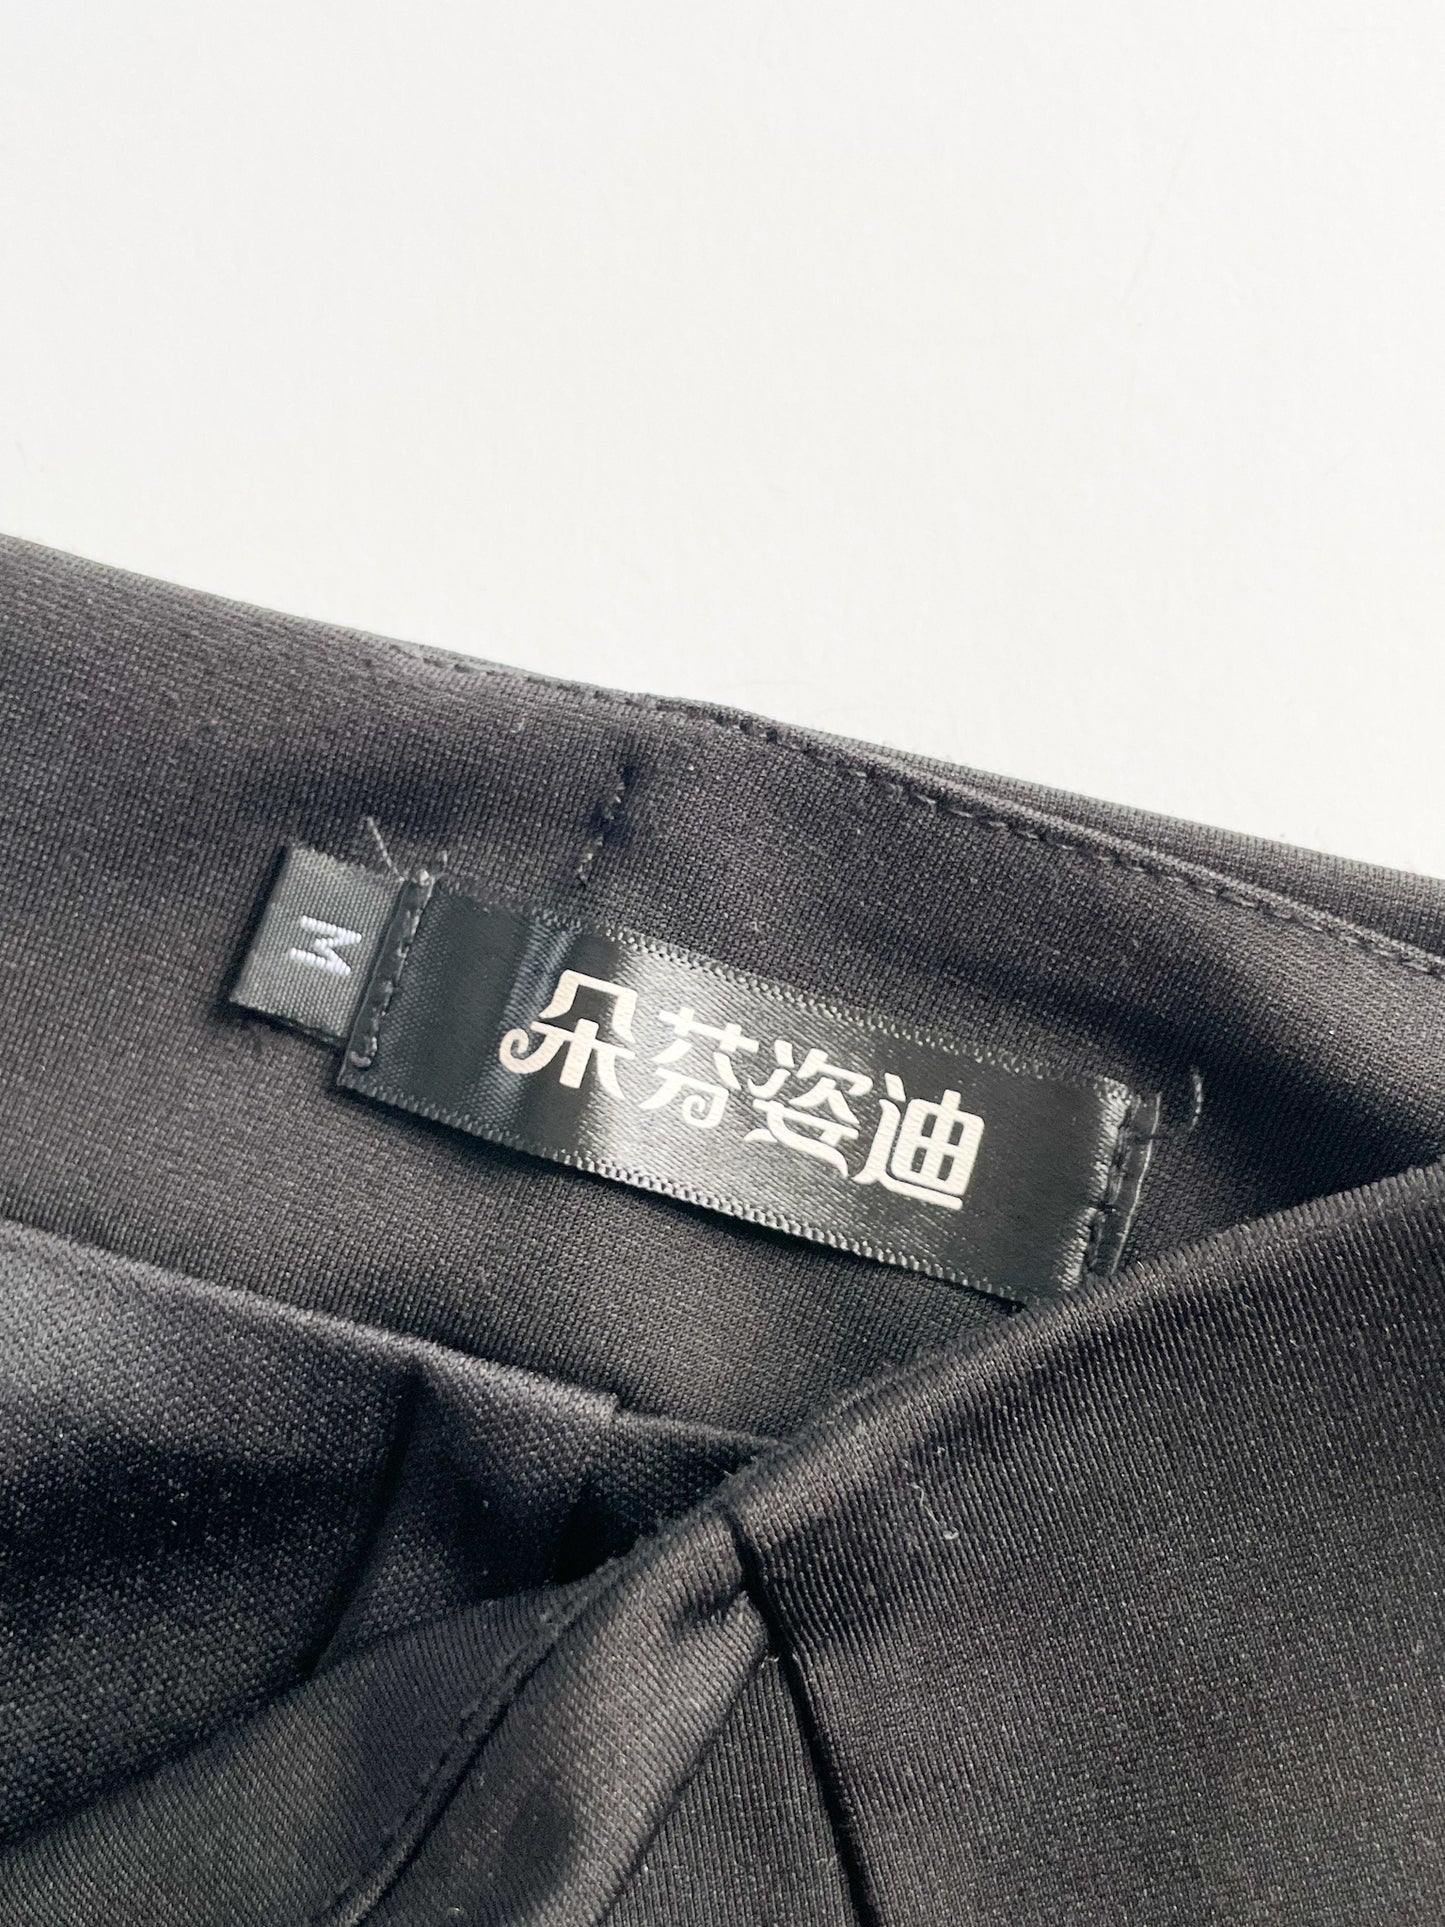 Black Mini Skort Skirt - Small